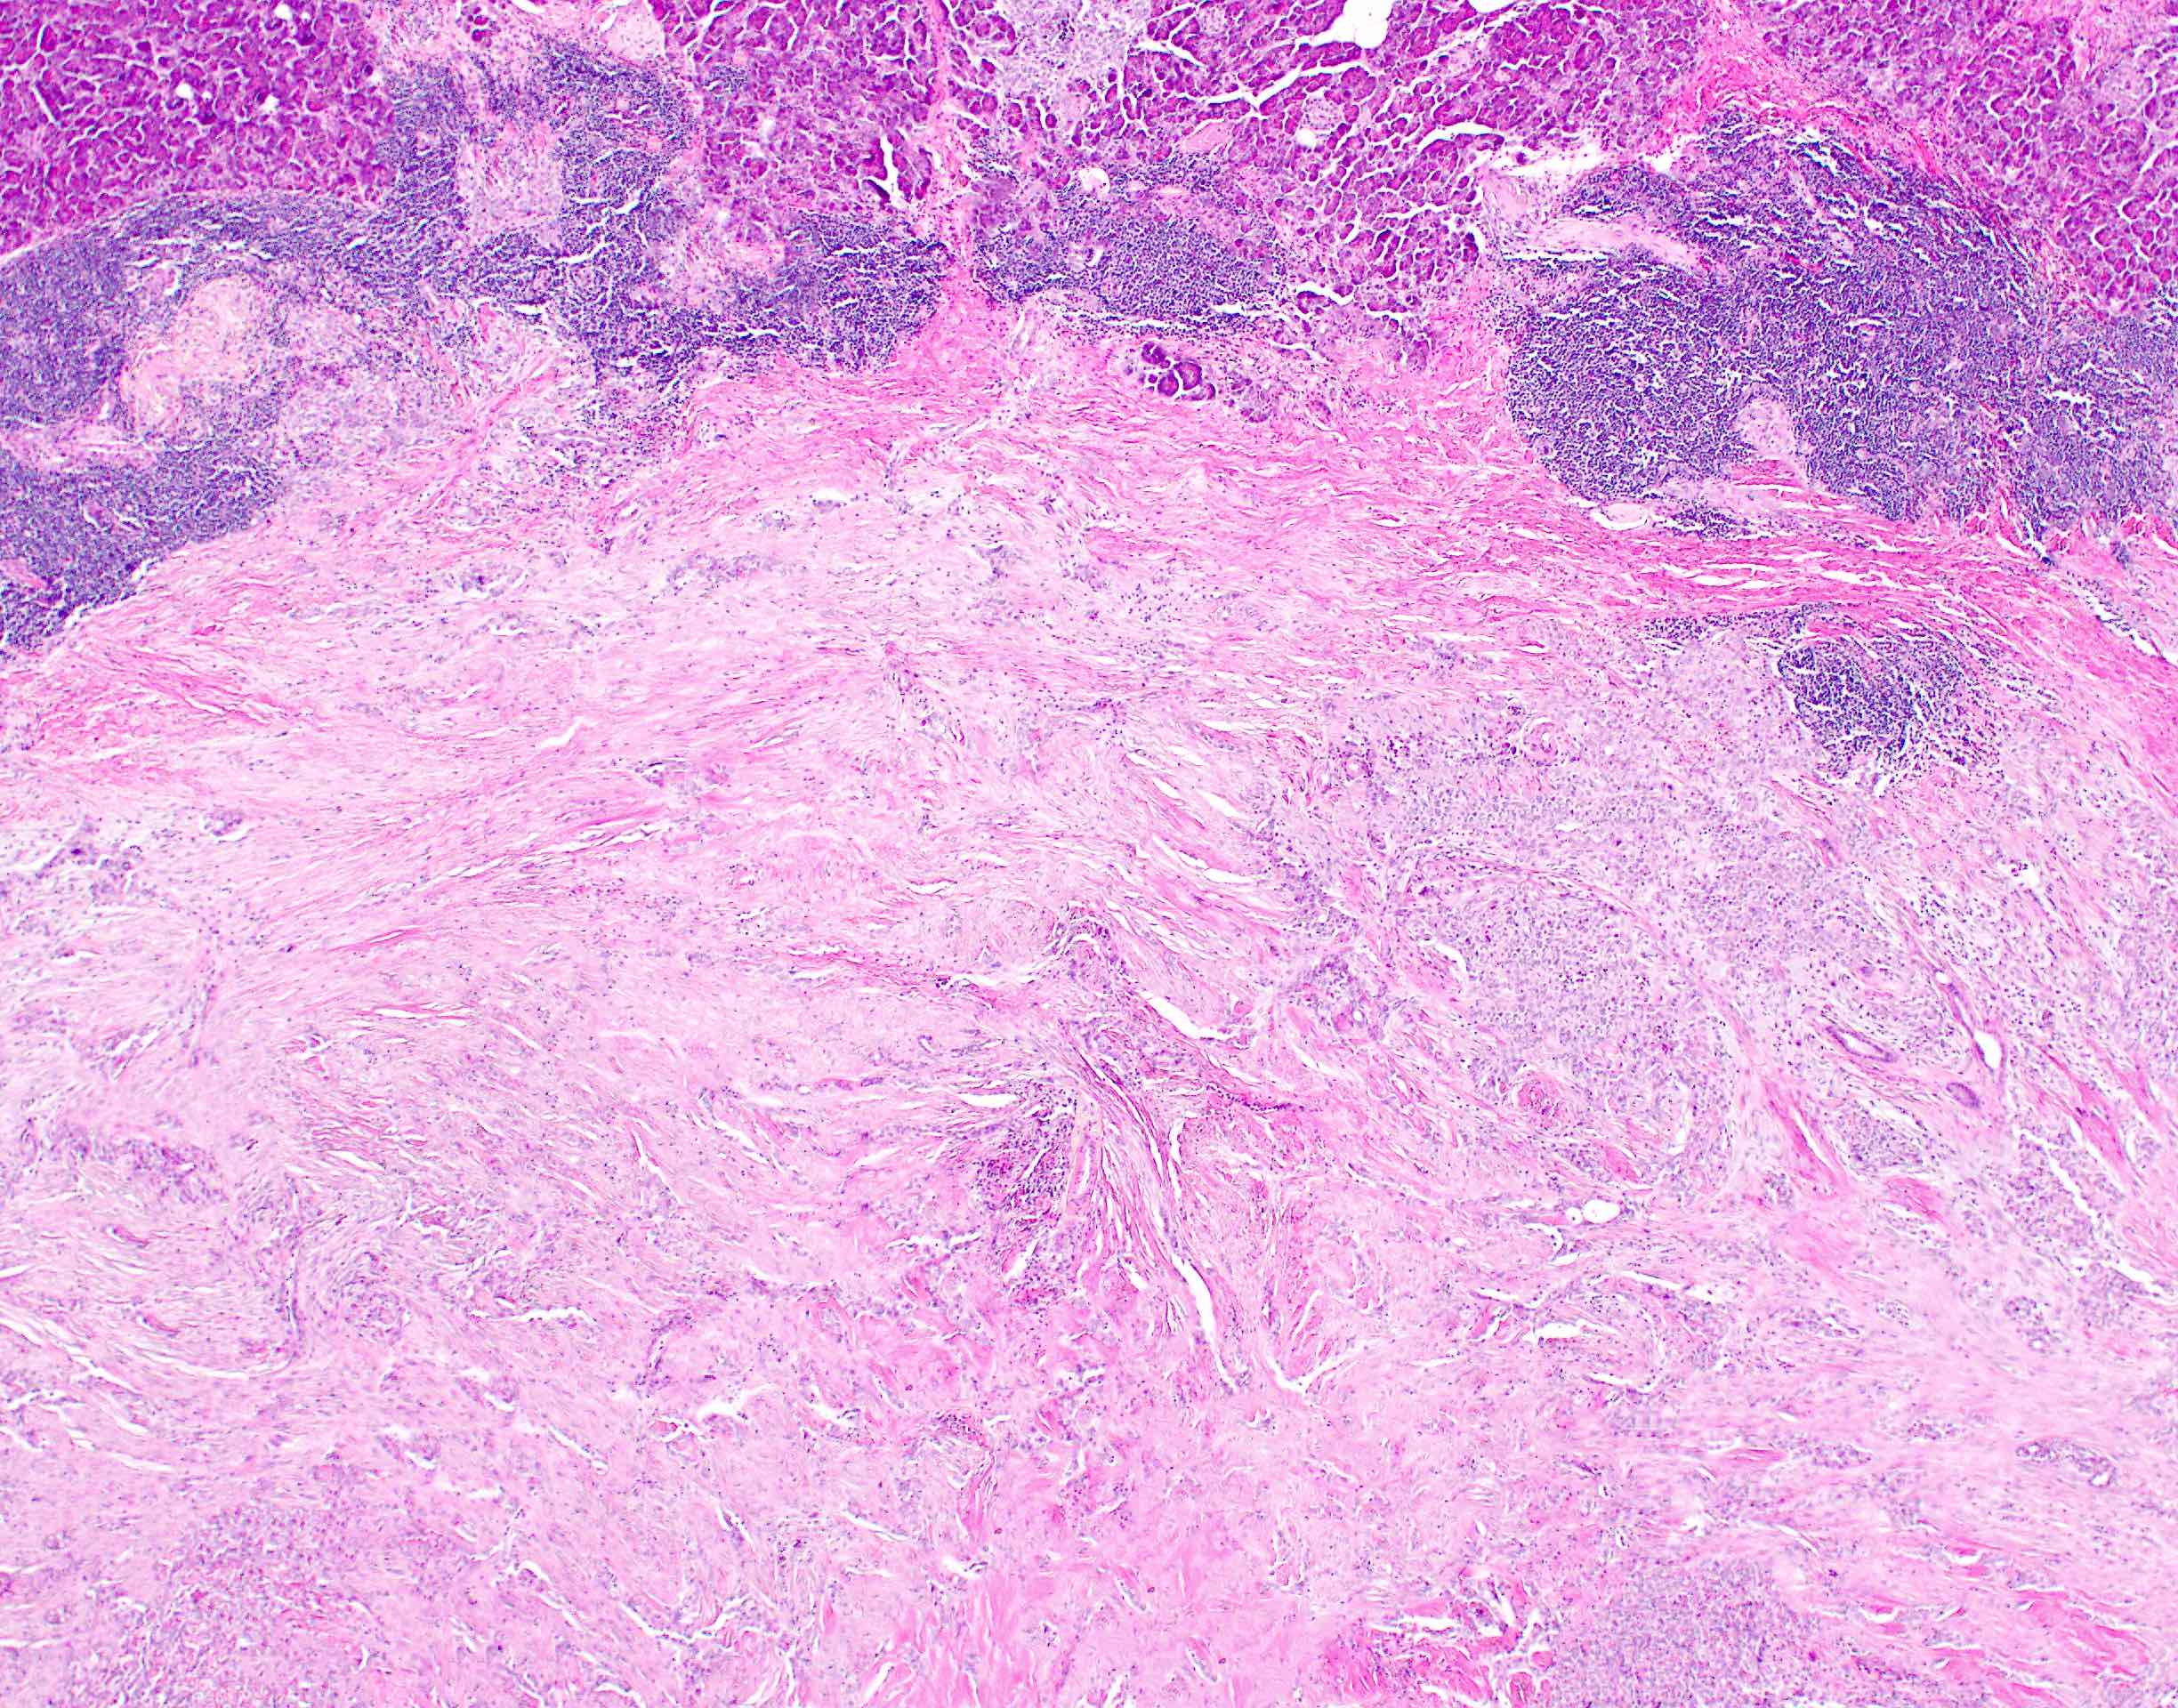 Peripheral dense lymphoid aggregates